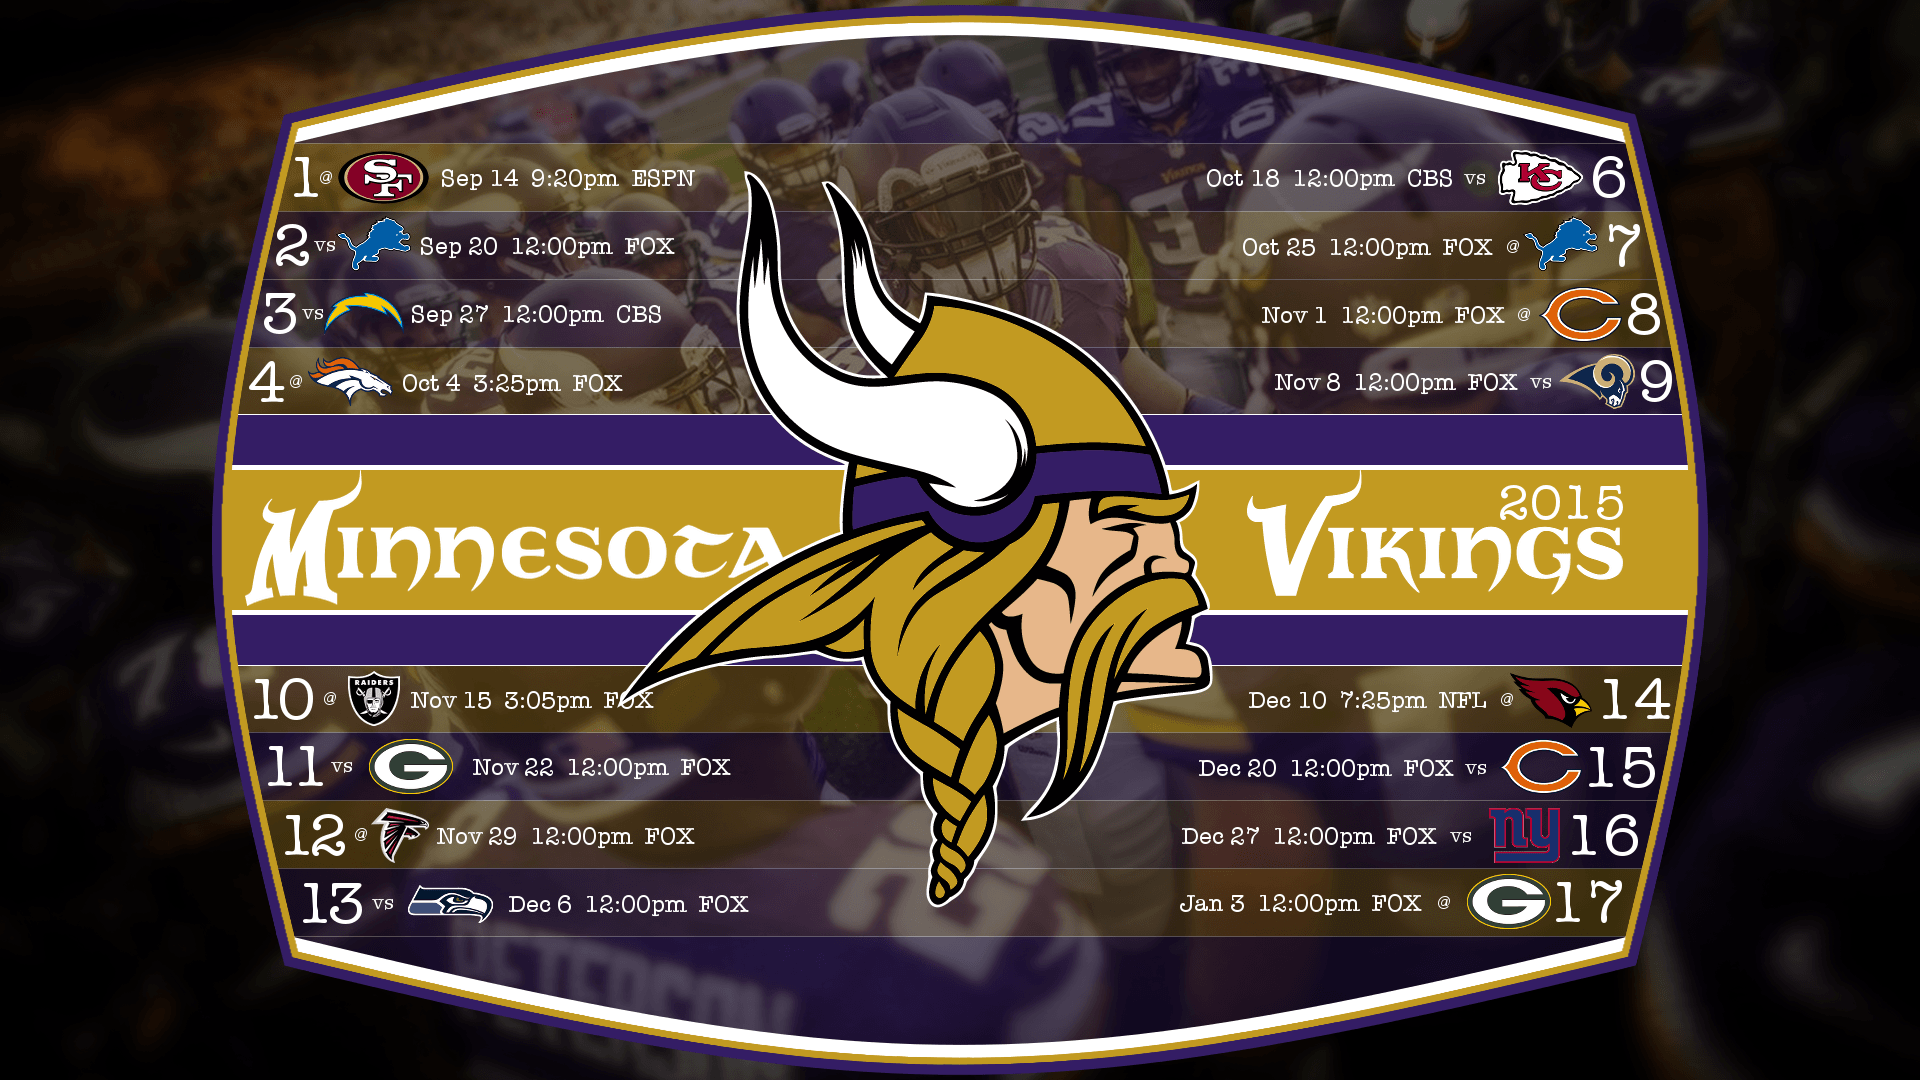 Minnesota Vikings 2015 Schedule Wallpaper, 43 Minnesota Vikings